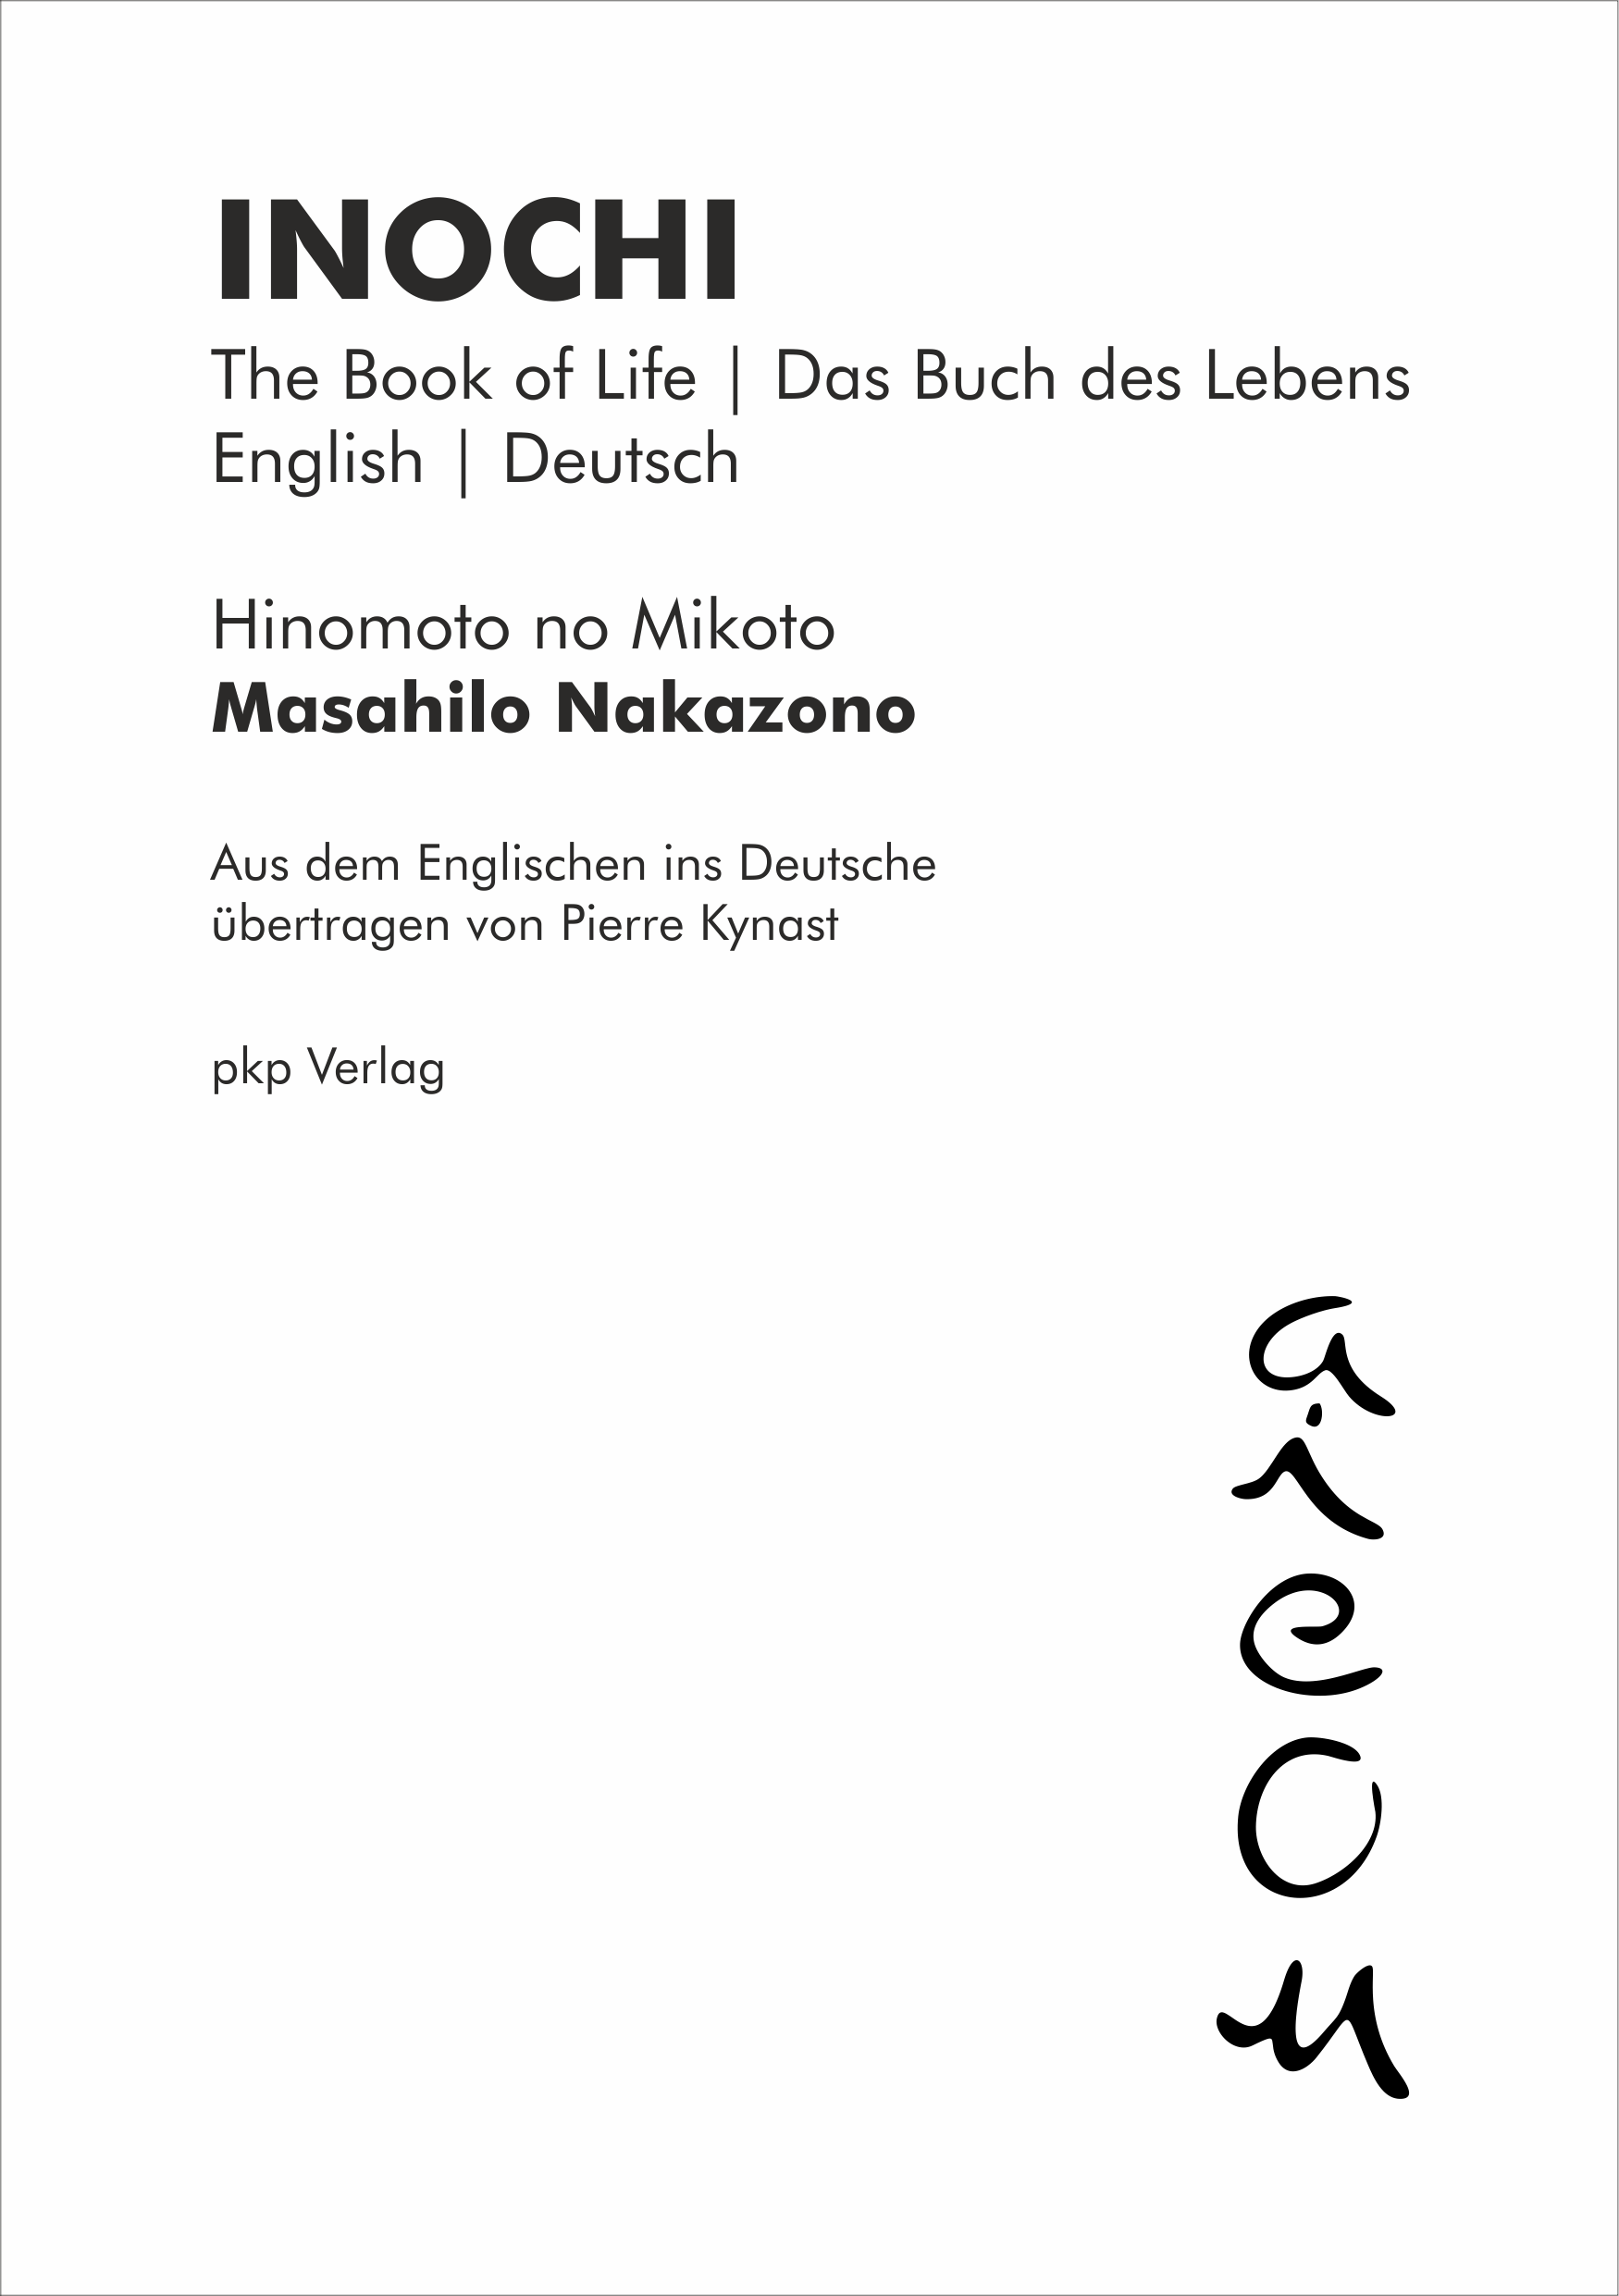 INOCHI - The Book of Life (Eng-Deu) (Mikoto Masahilo Nakazono)